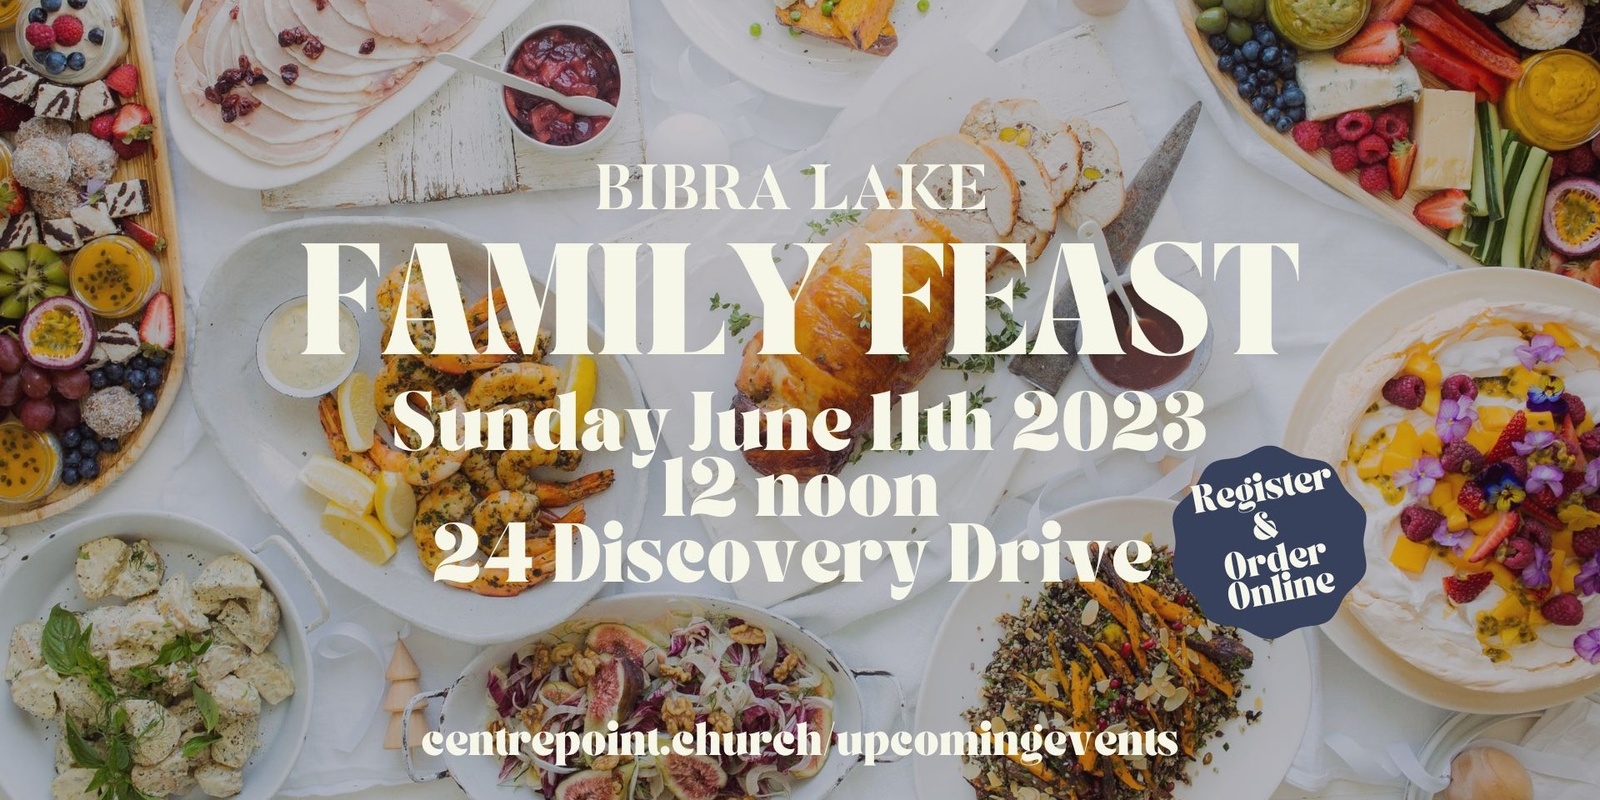 Bibra Lake Family Feast